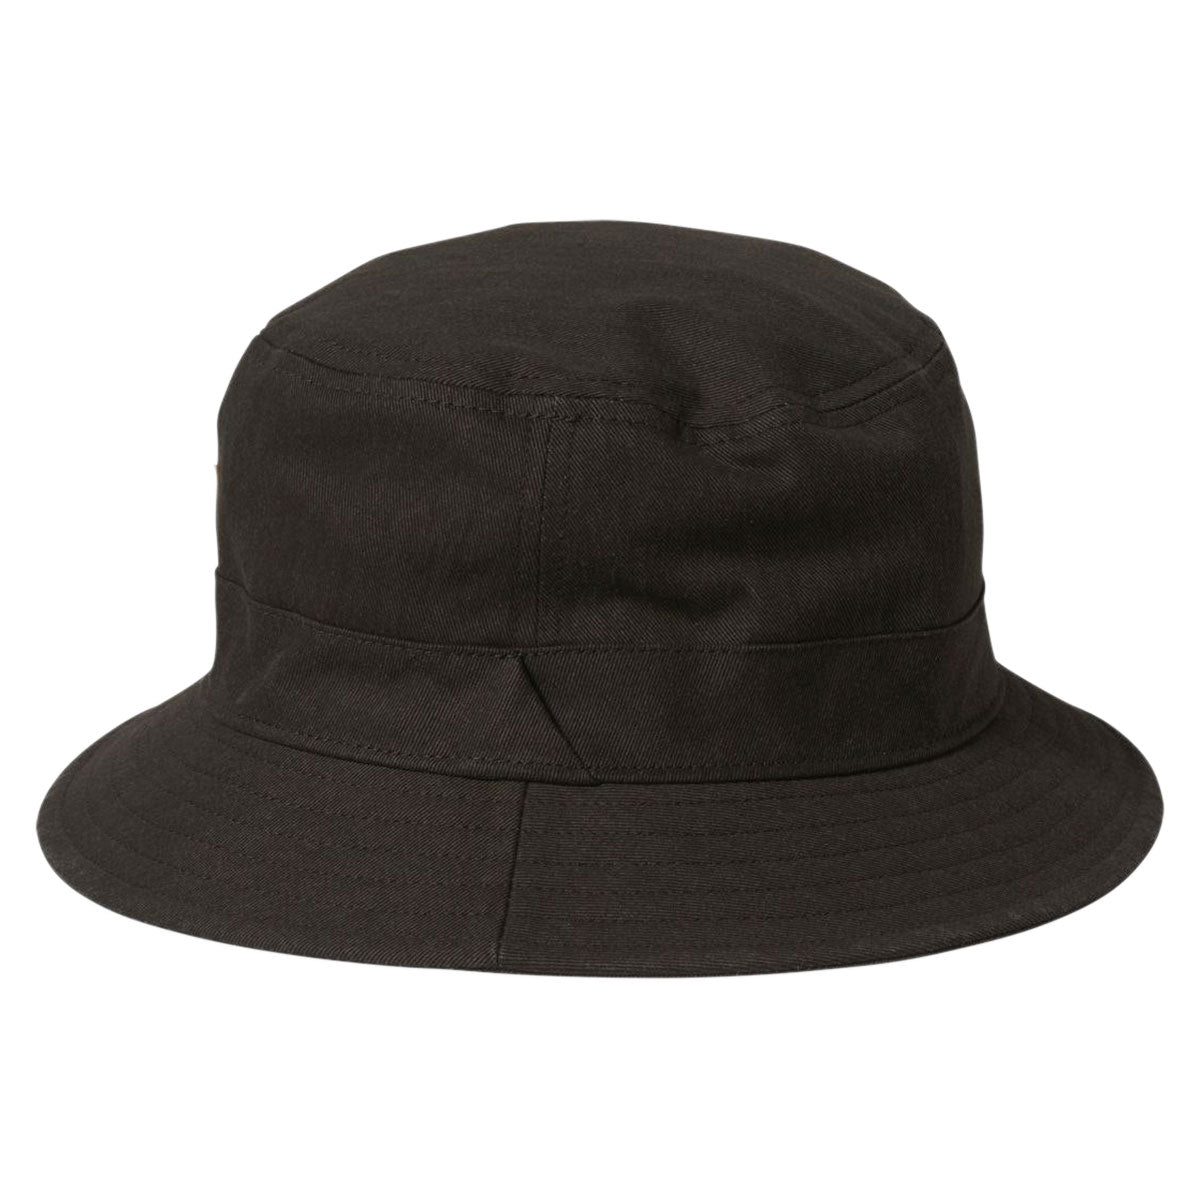 Brixton Woodburn Packable Bucket Hat - Black Sol Wash image 3